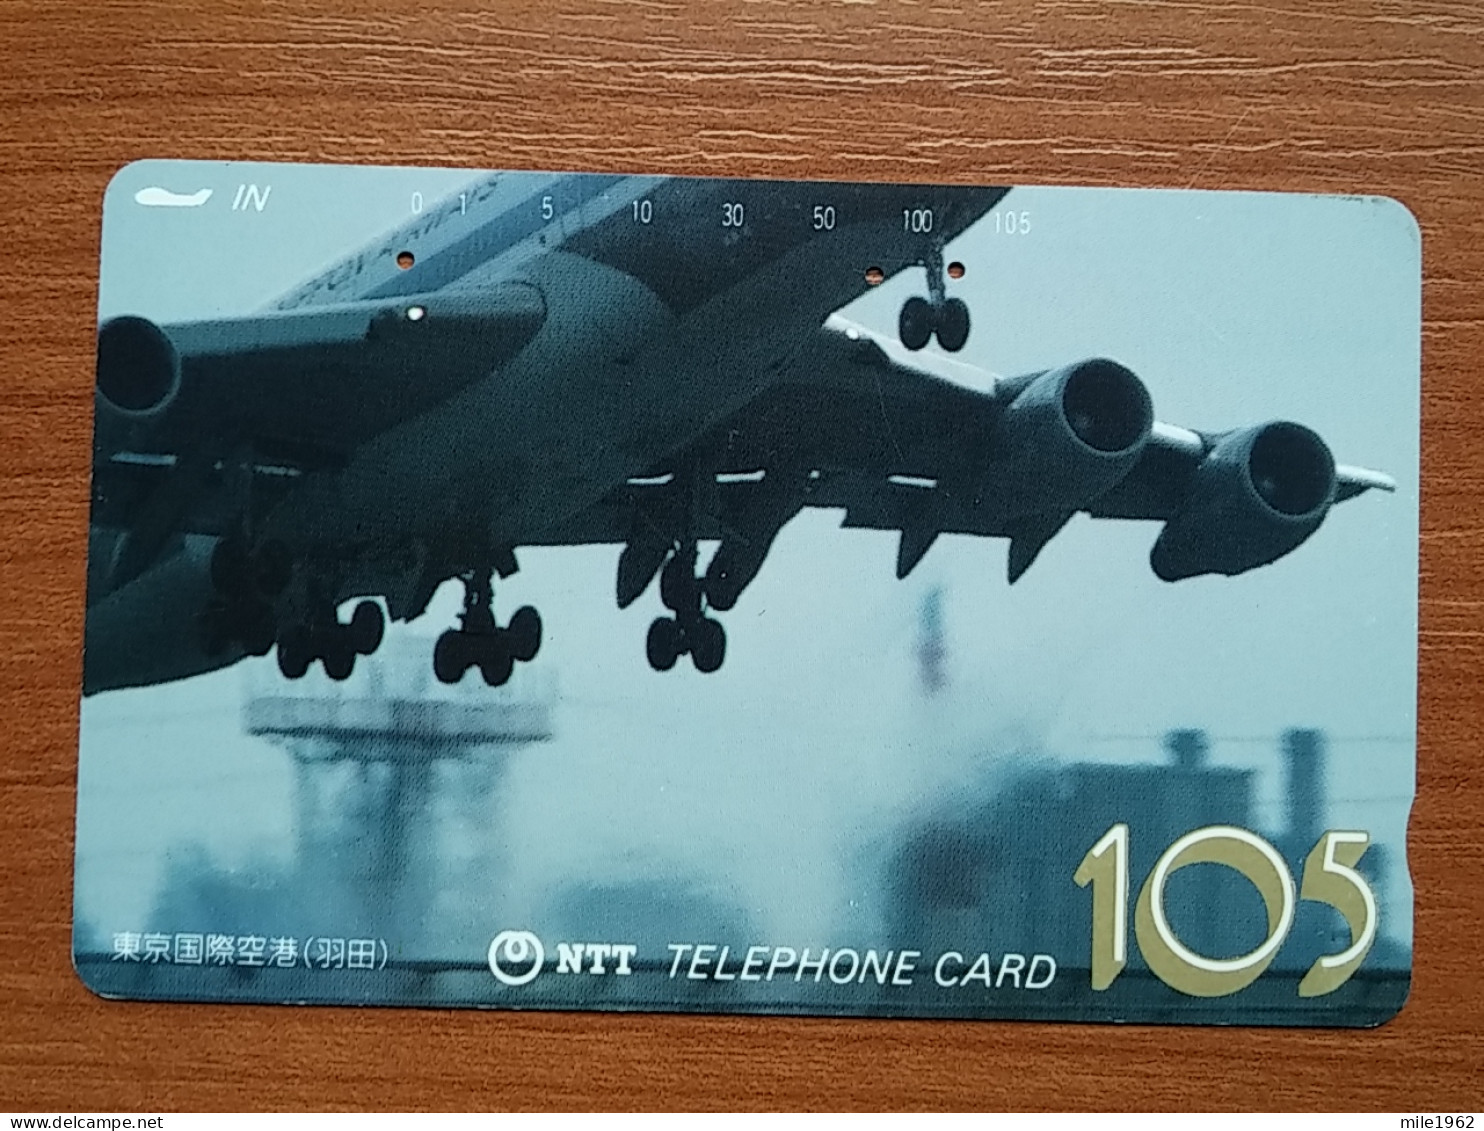 T-344 - JAPAN, TELECARD, PHONECARD,  Avion, Plane, Avio, NTT 230-124 - Vliegtuigen